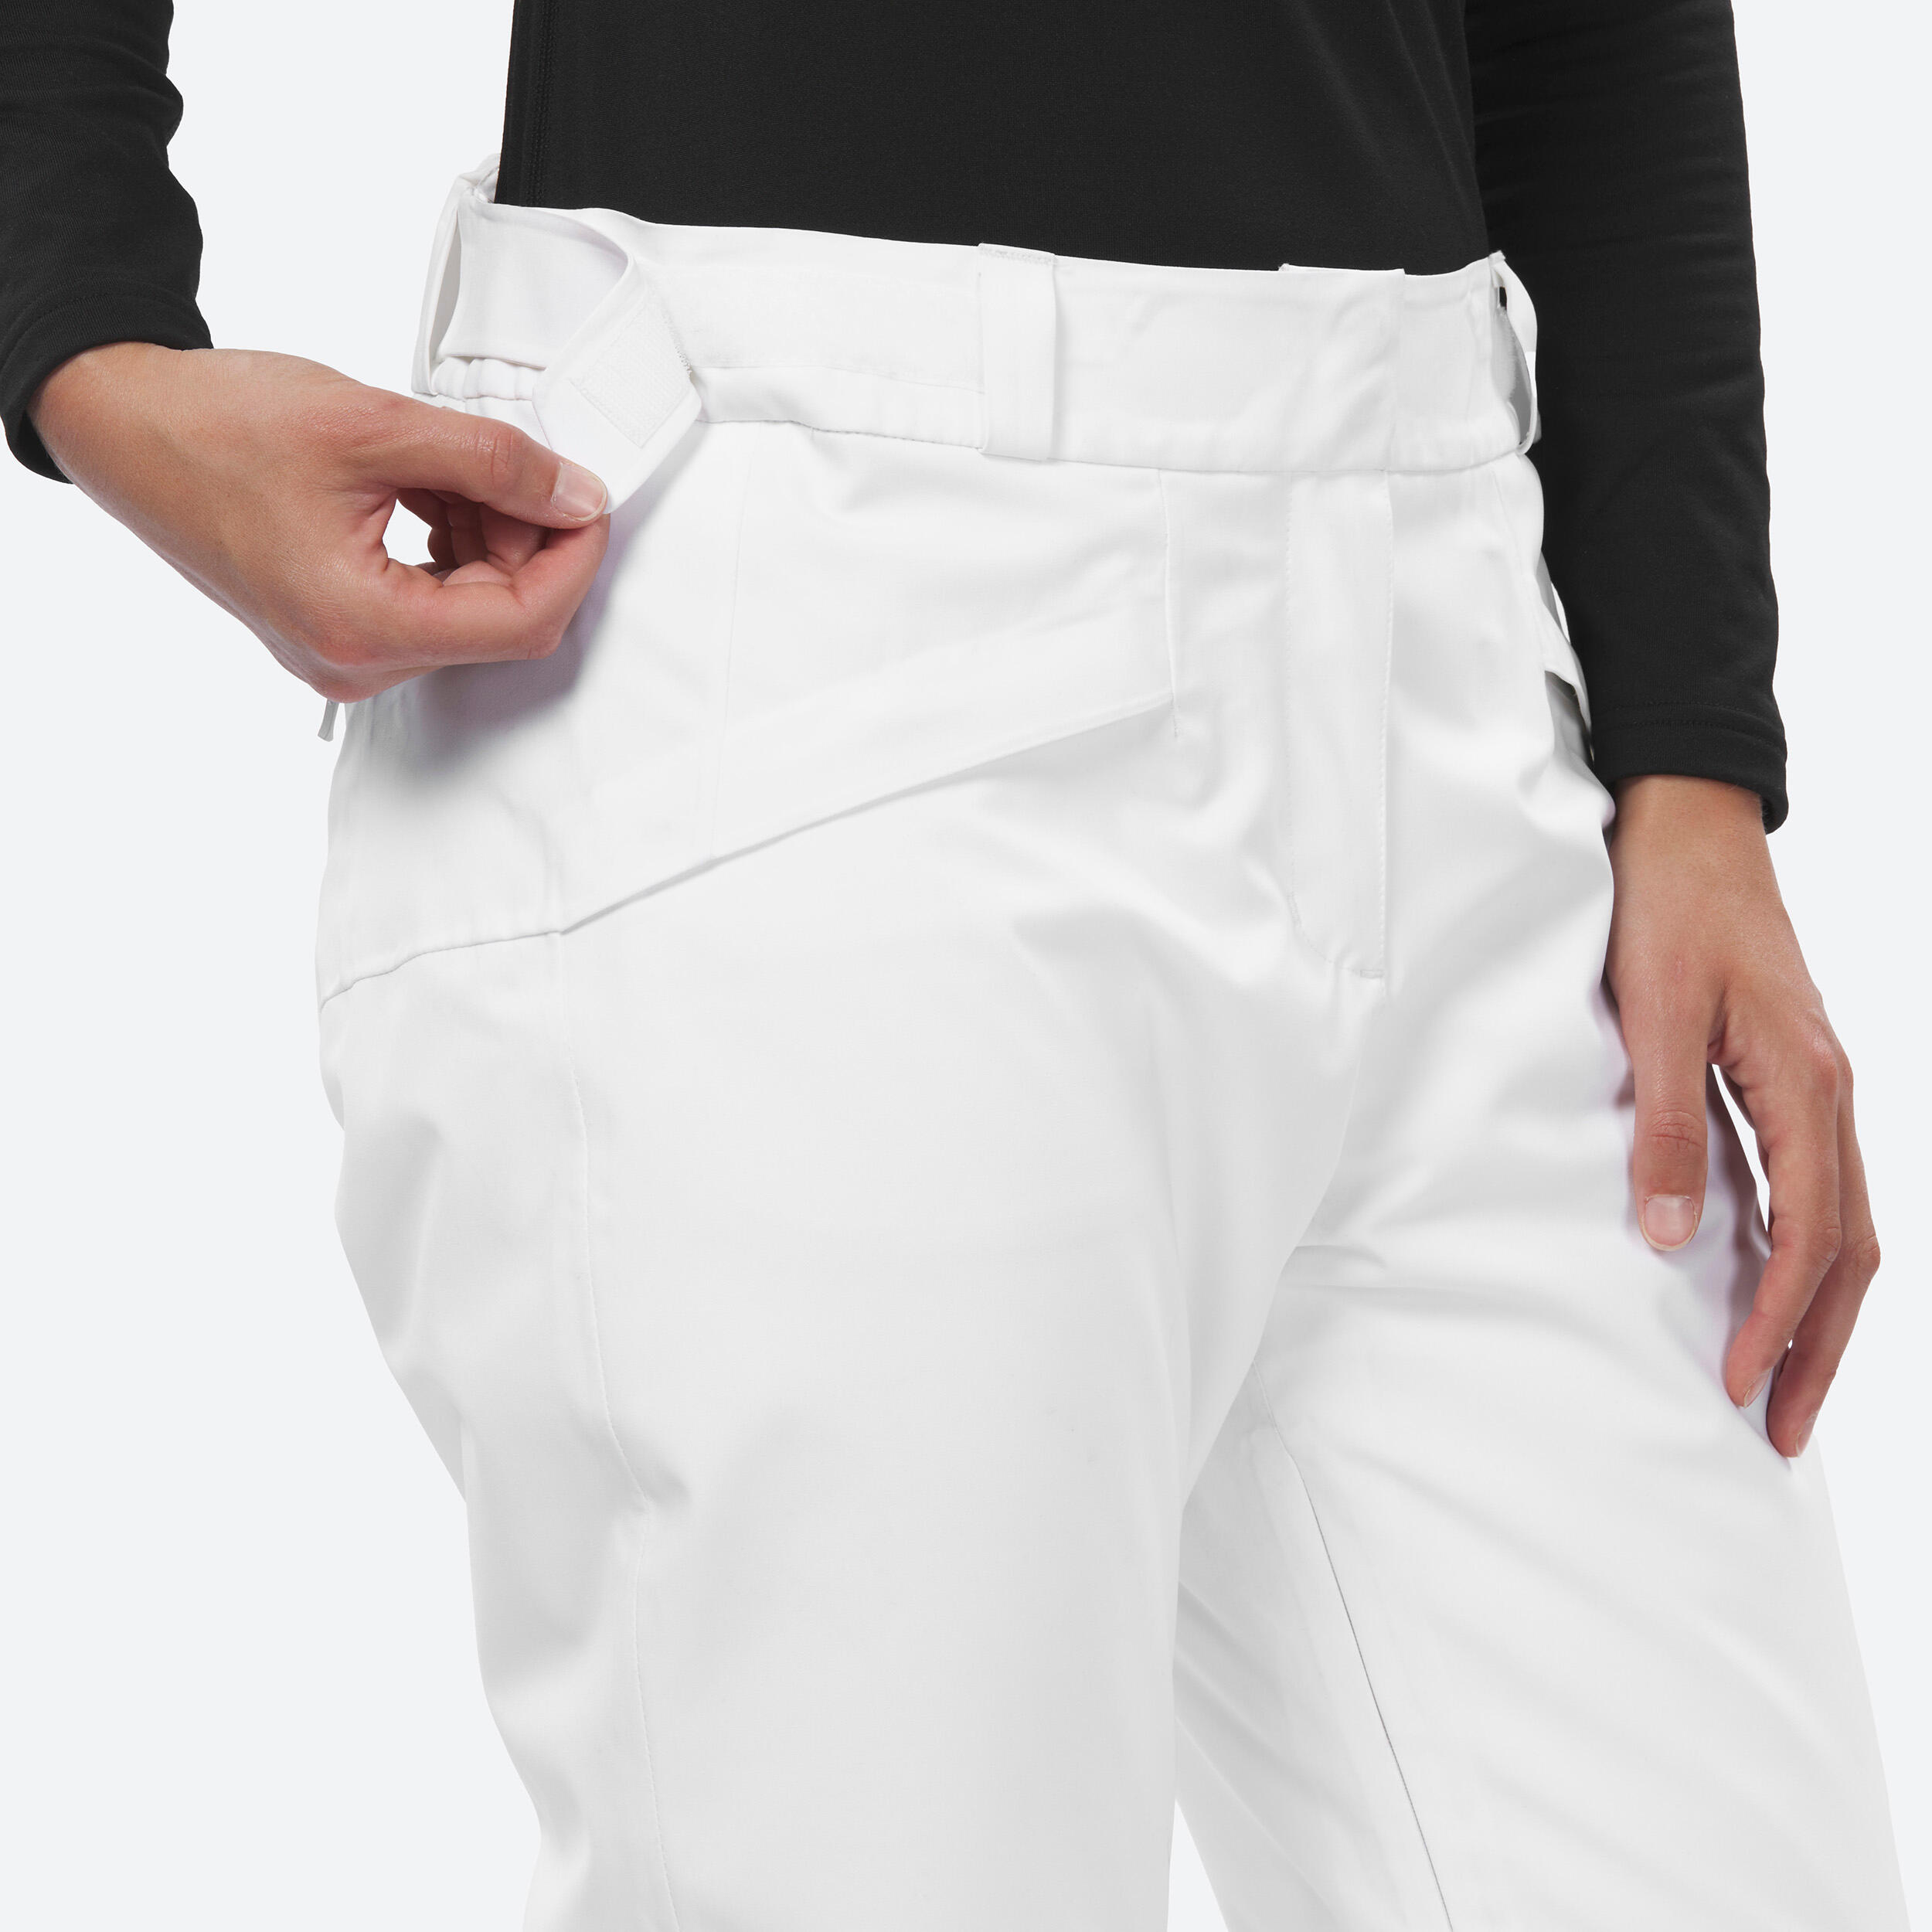 Women's Warm Ski Trousers 580 - White 4/9